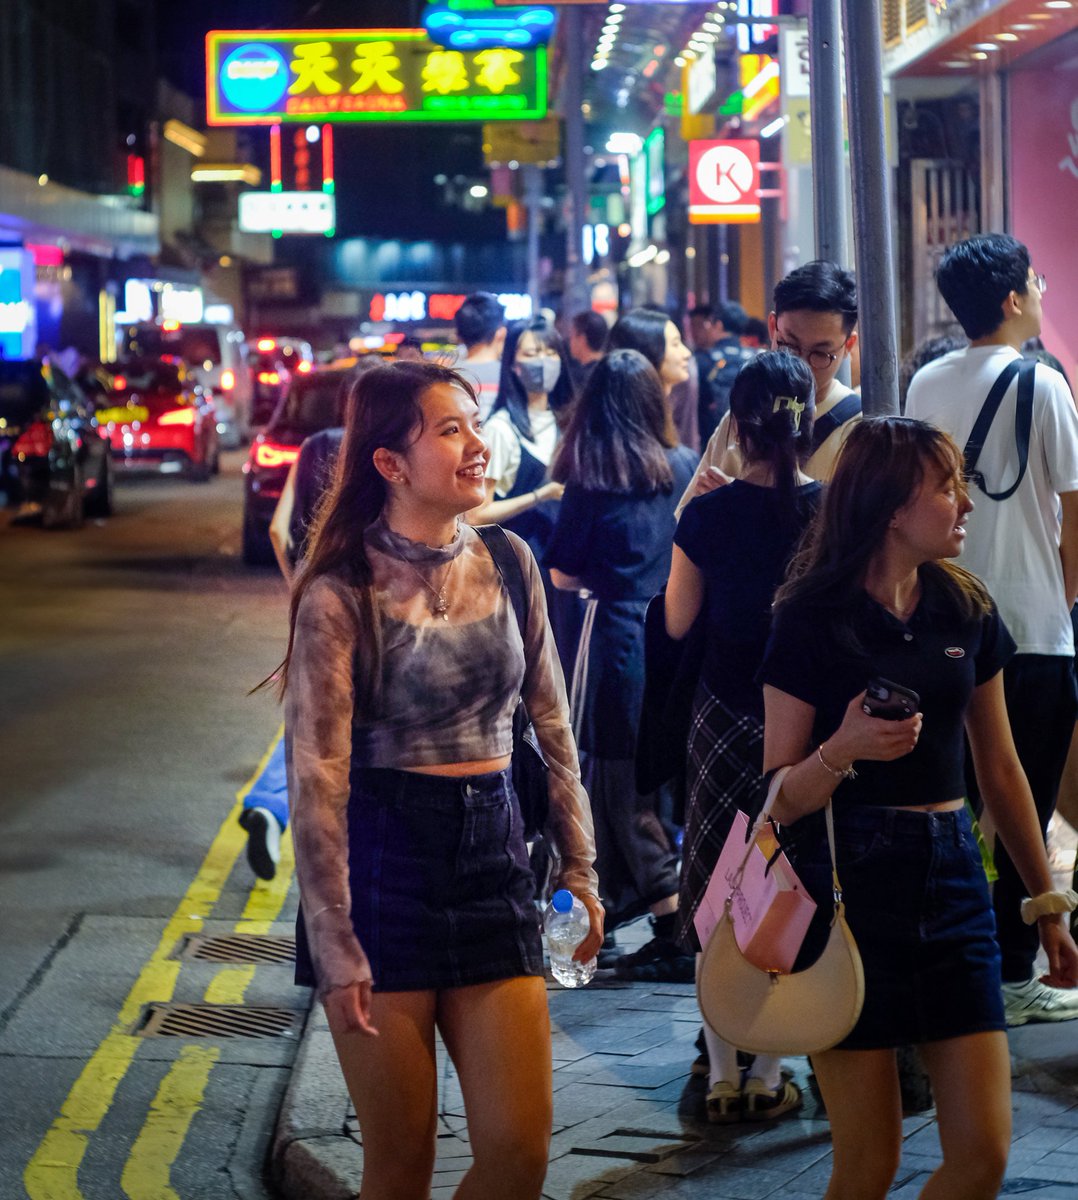 at Prat Avenue ...🚶🏼‍♀️✨ #hkig #nightcity #hkiger #streetphotography #neonlights  #nightlife #pratavenue #discoveryhongkong #neon #hongkonginsta #hongkongnightlife #夜景 #nightphotography  #neonsign #霓虹燈 #ネオンサイン #under_the_sign_hongkong